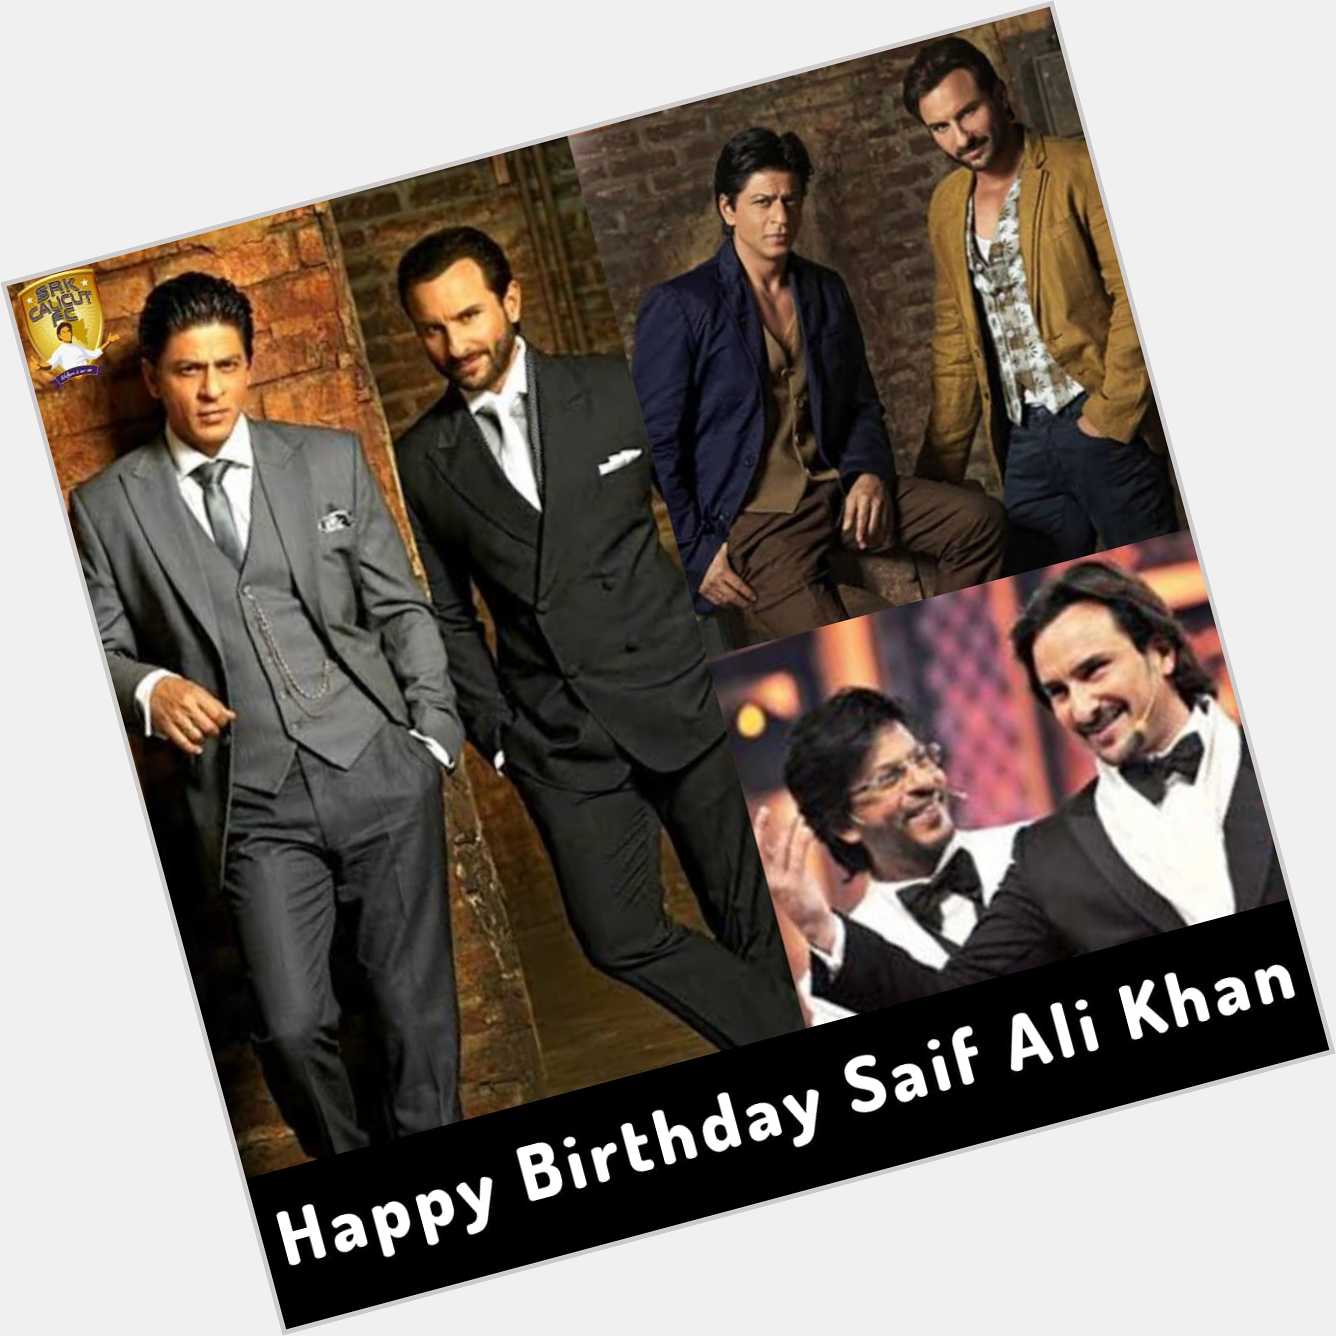 Happy birthday Saif Ali Khan. 